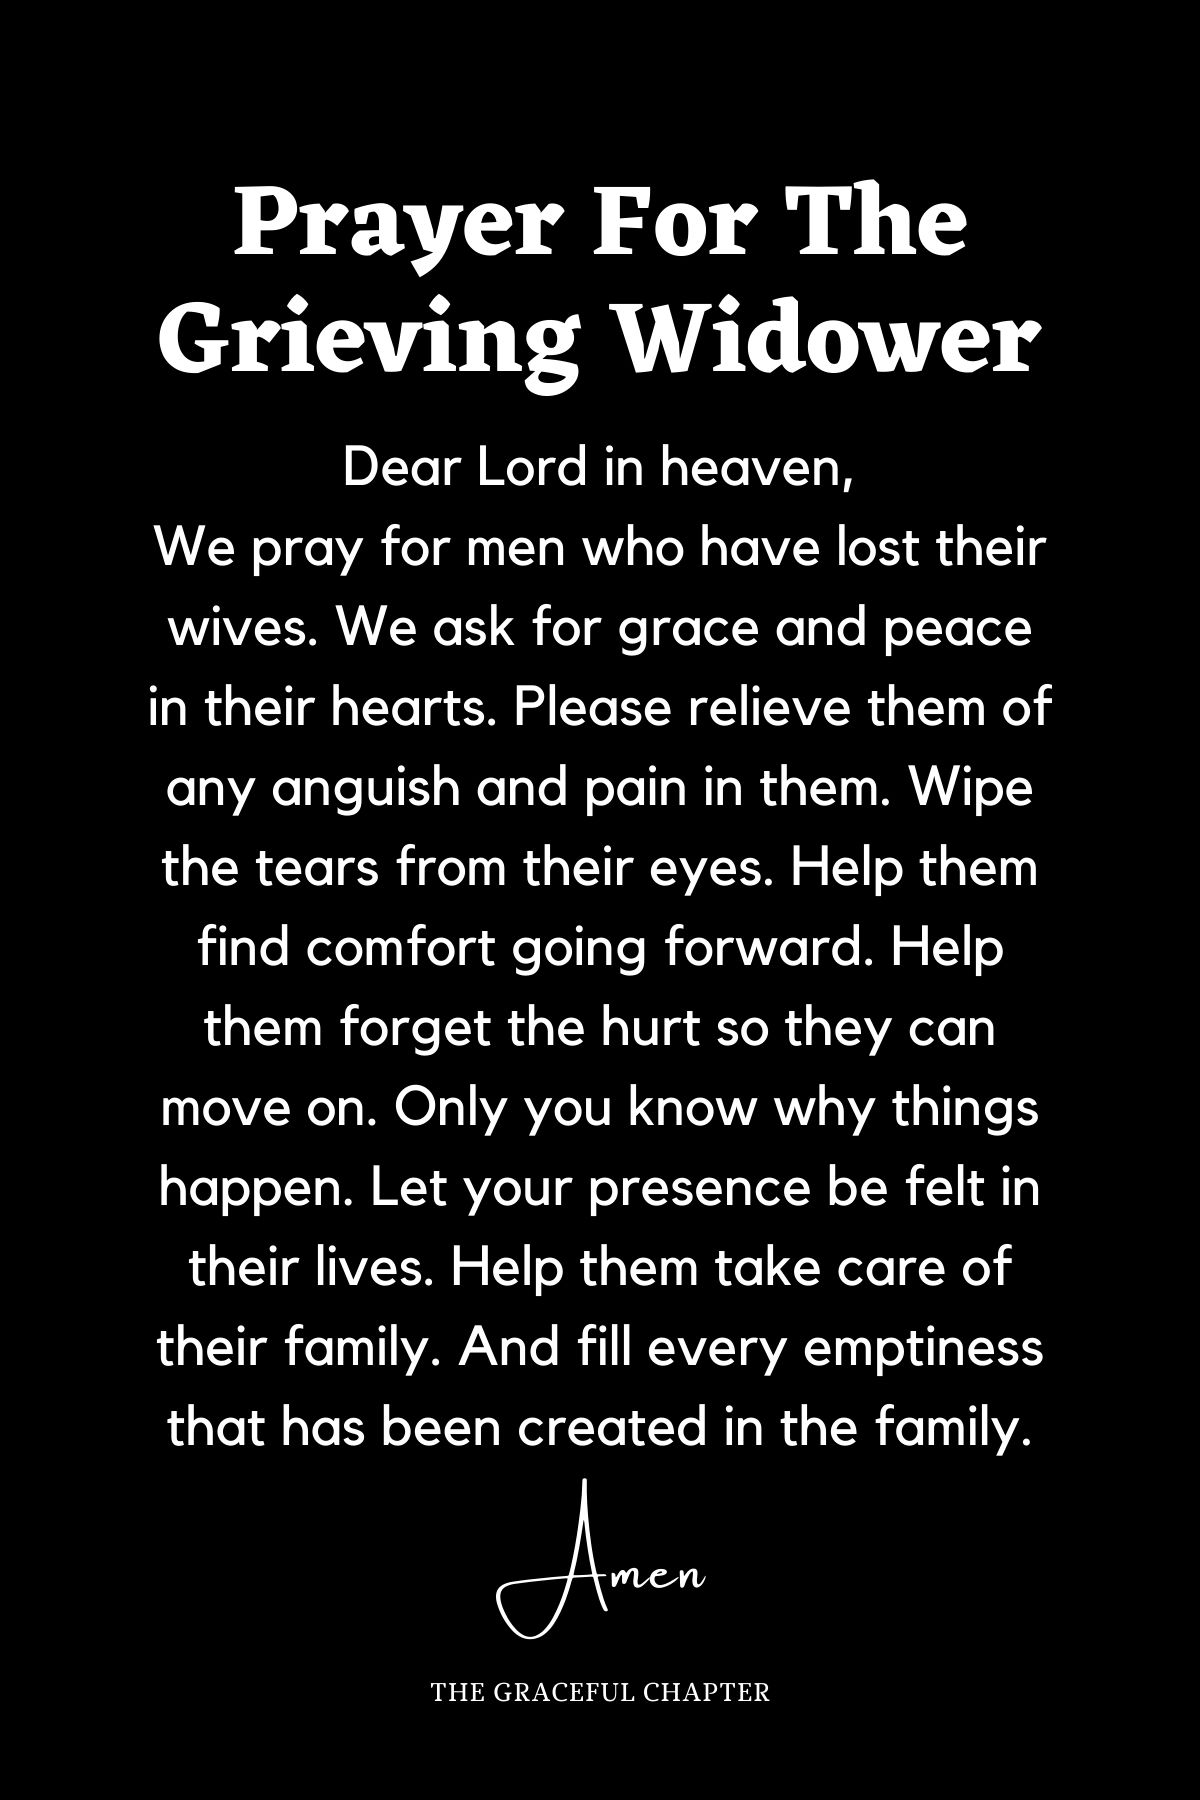 Prayer for the grieving widower